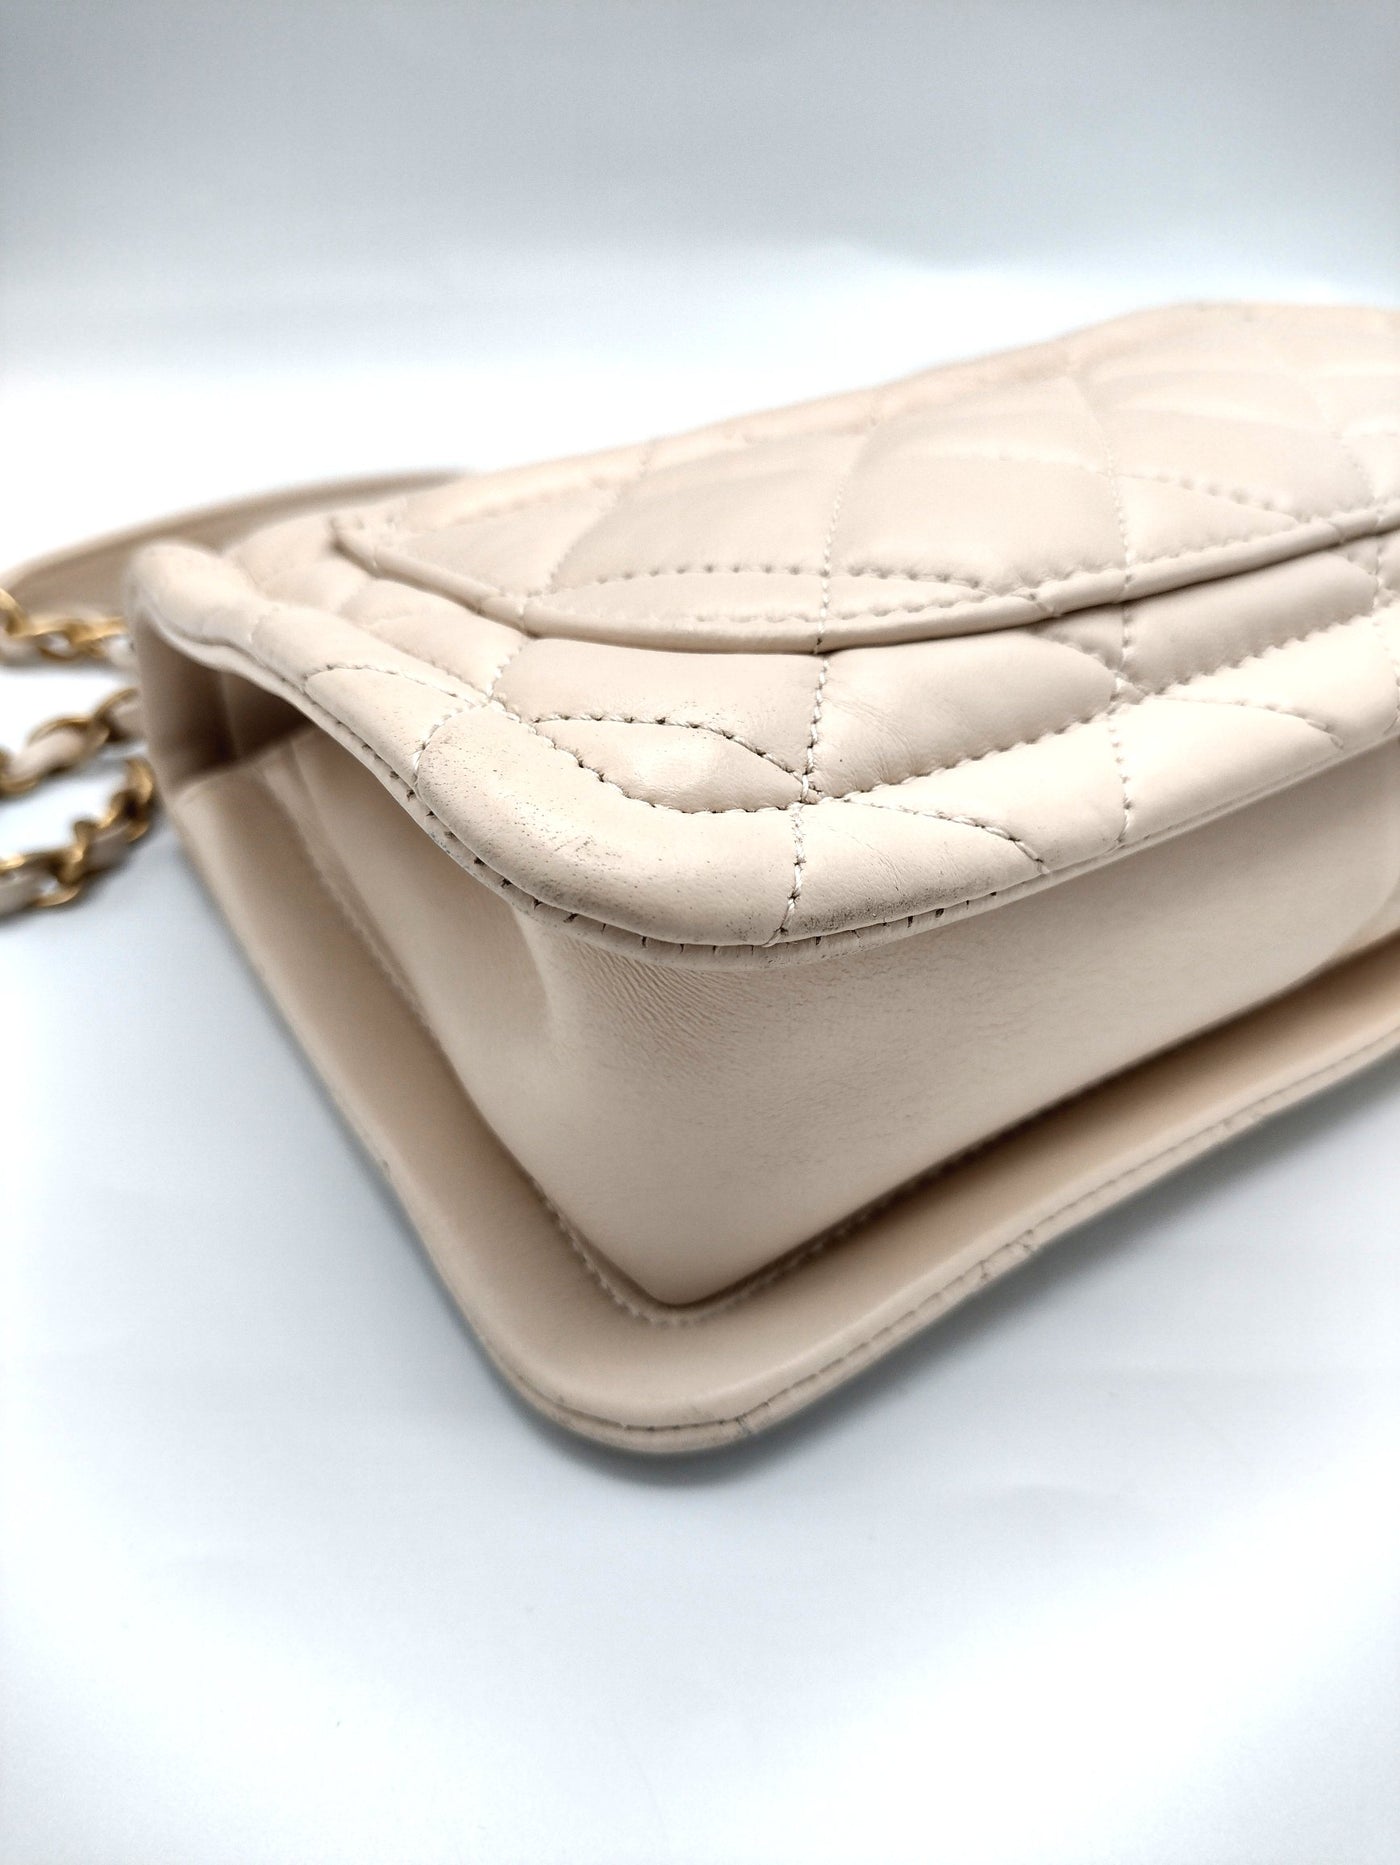 CHANEL cream lambskin handbag with brushed gold hardware